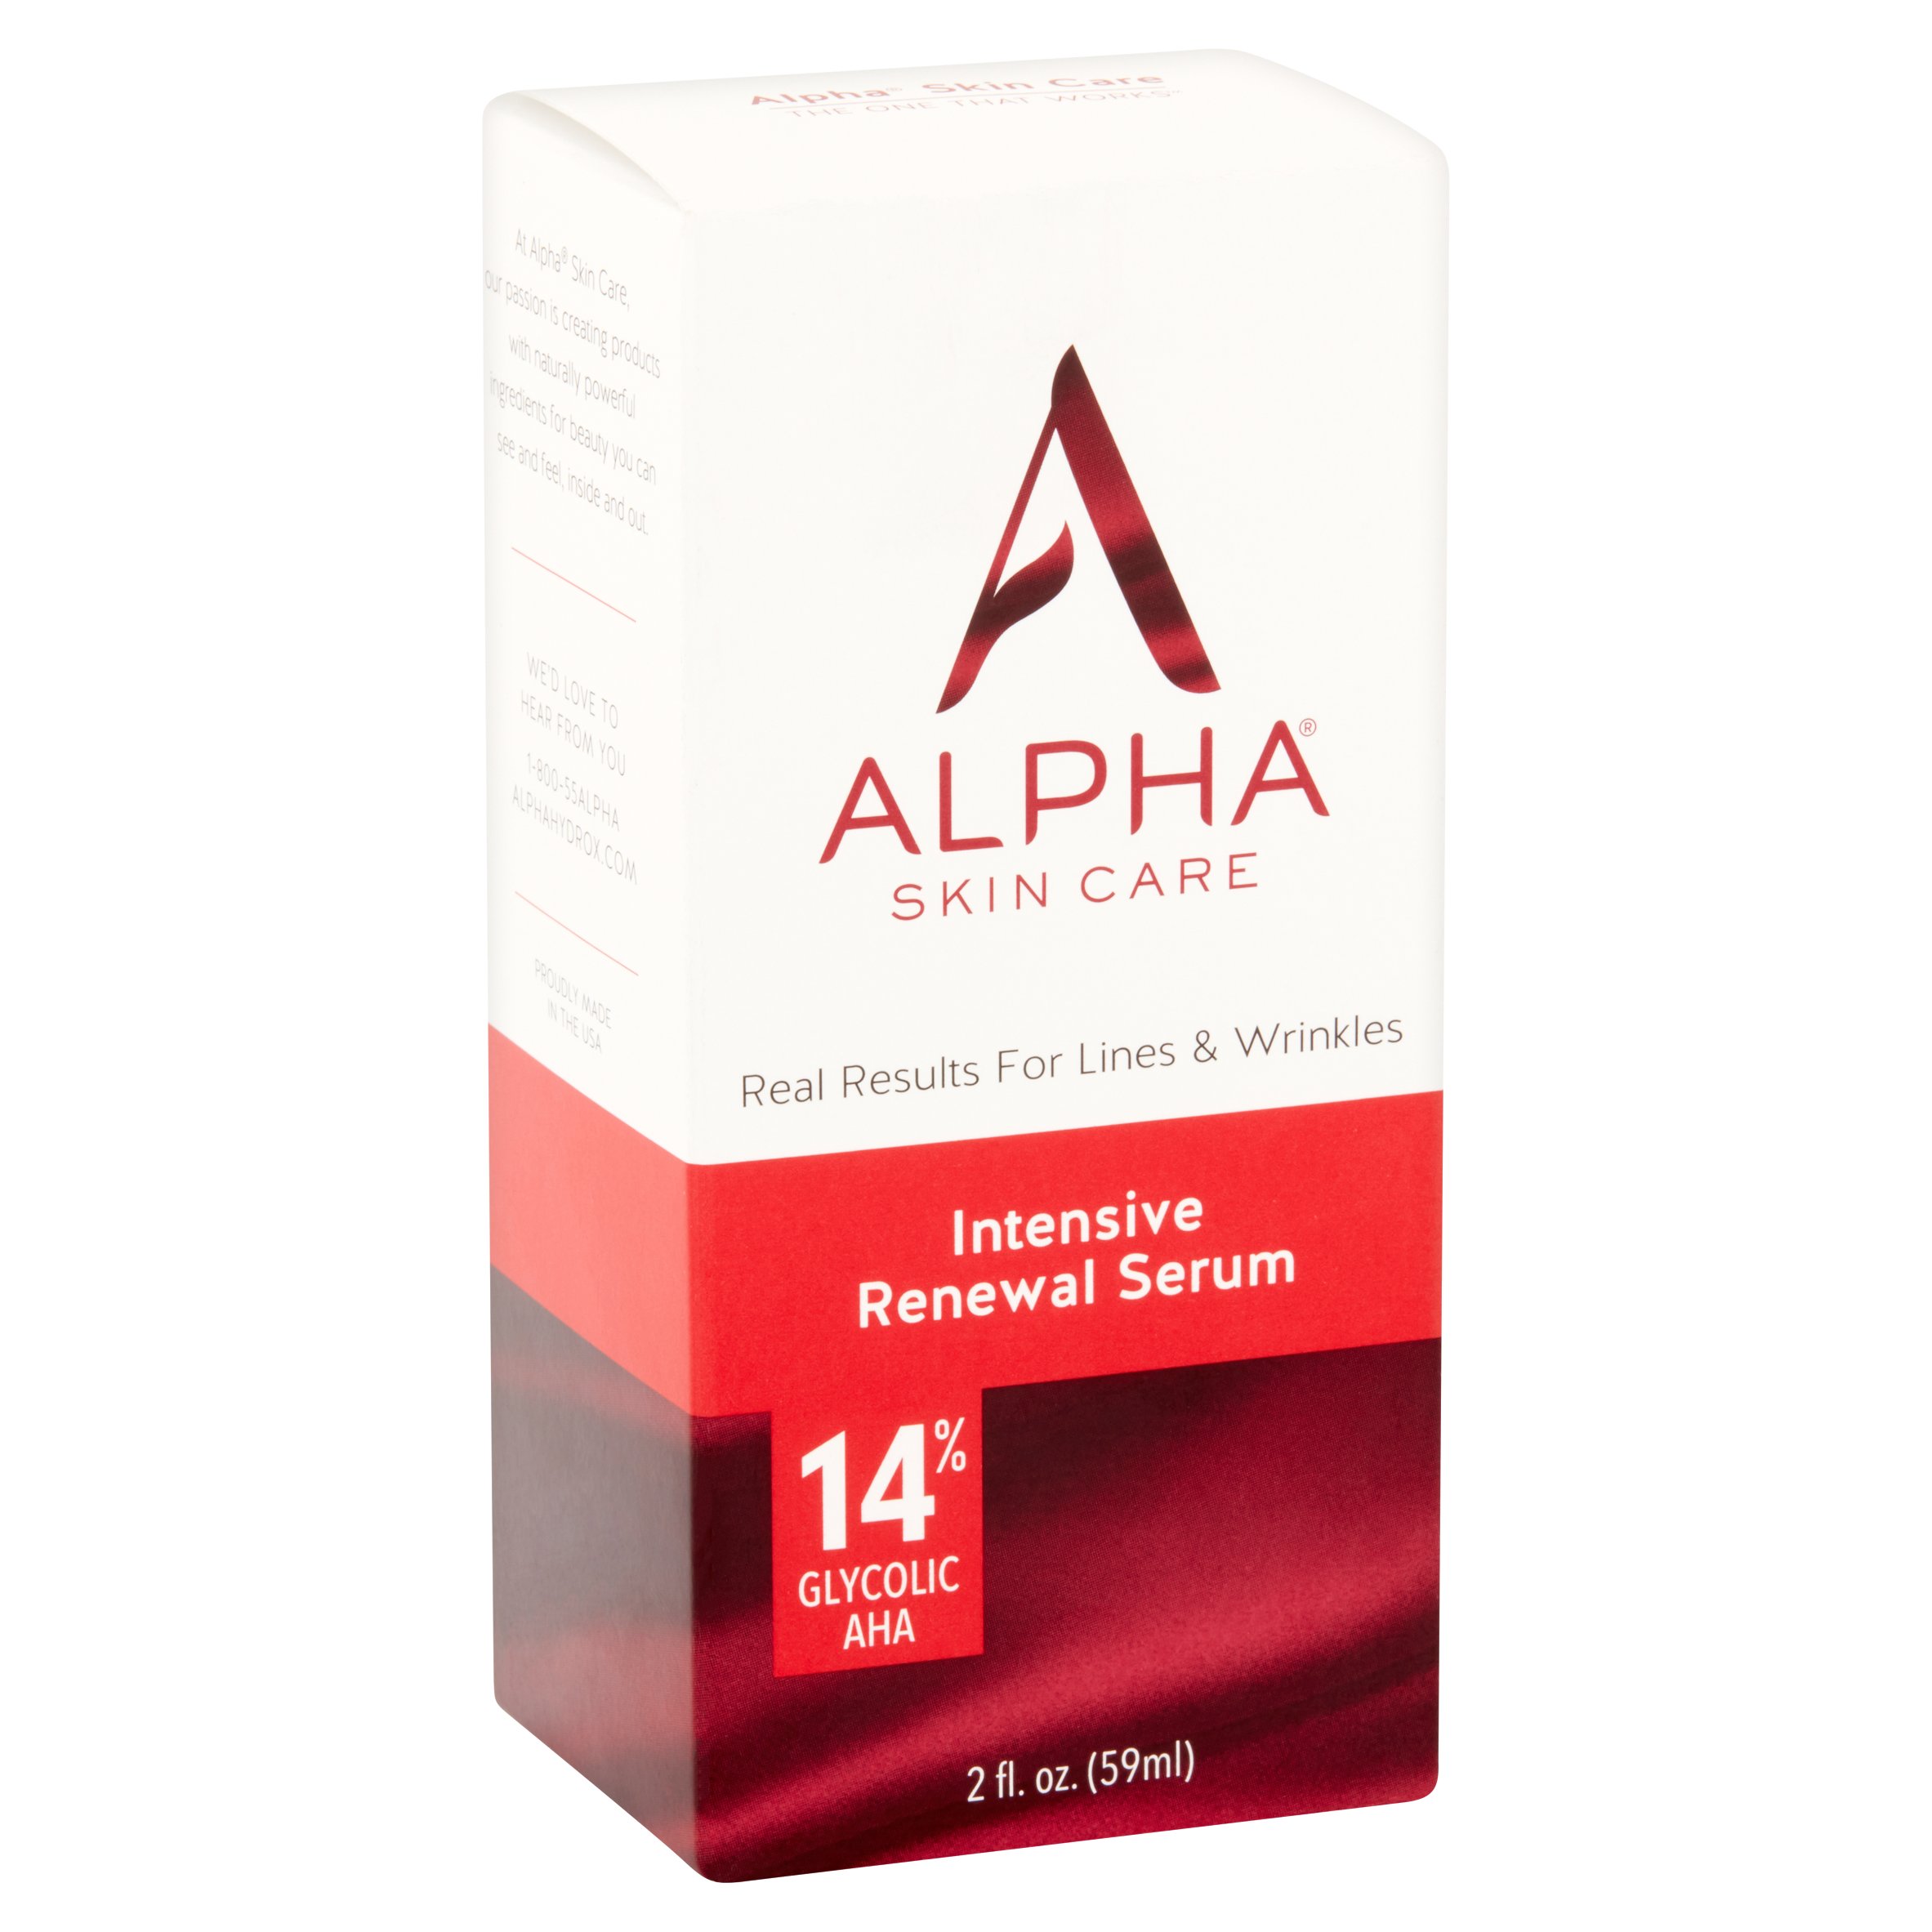 Alpha Skin Care Intensive Renewal Serum, 2 fl oz - image 3 of 5